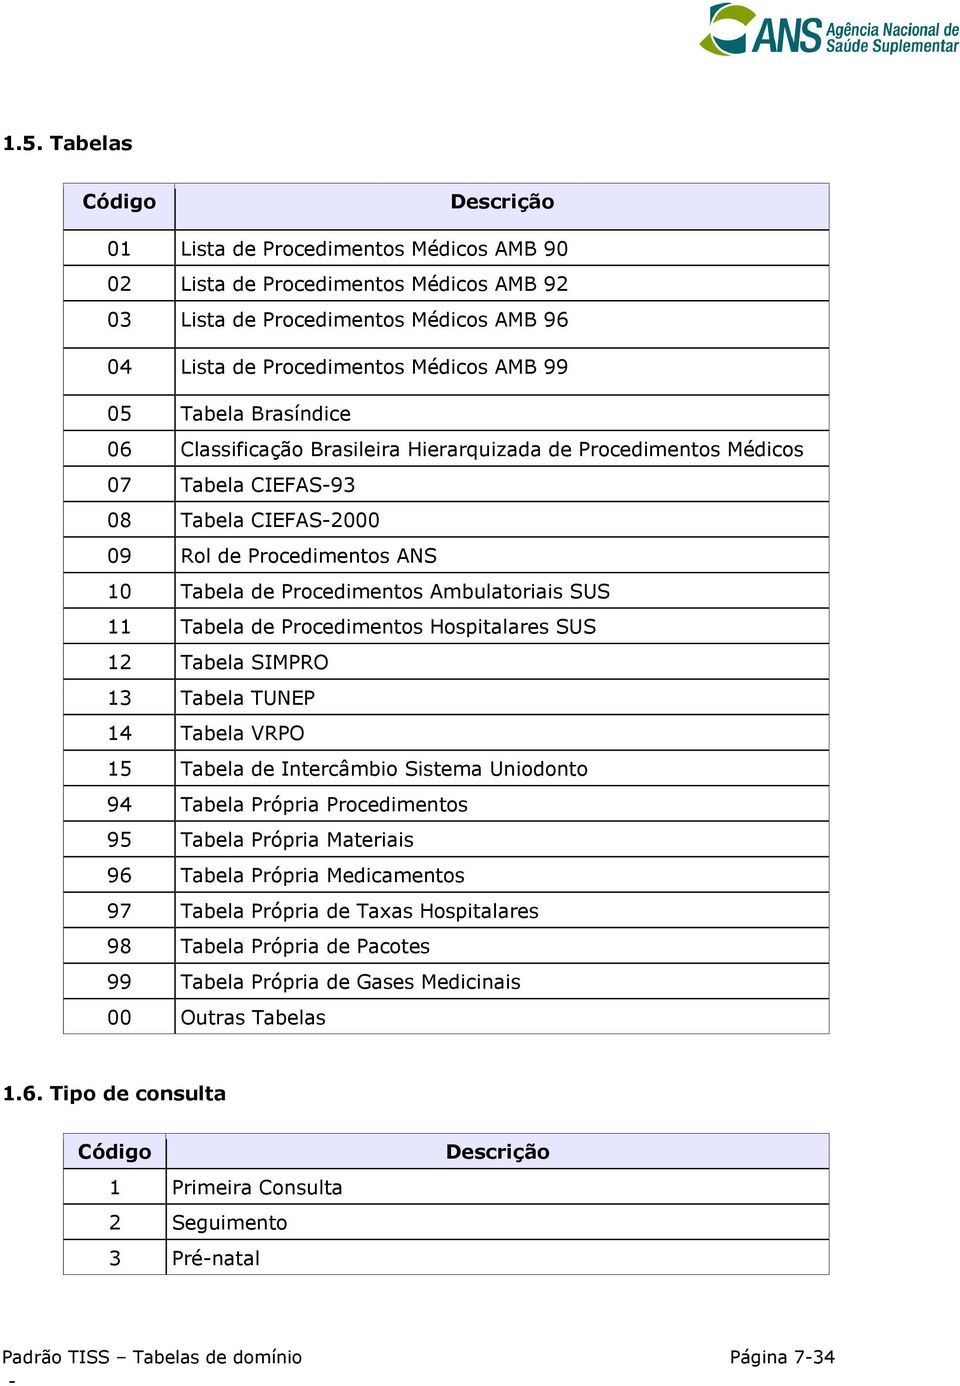 14 Tabela VRPO 15 Tabela de Intercâmbi Sistema Unidnt 94 Tabela Própria s 95 Tabela Própria Materiais 96 Tabela Própria Medicaments 97 Tabela Própria de Taxas Hspitalares 98